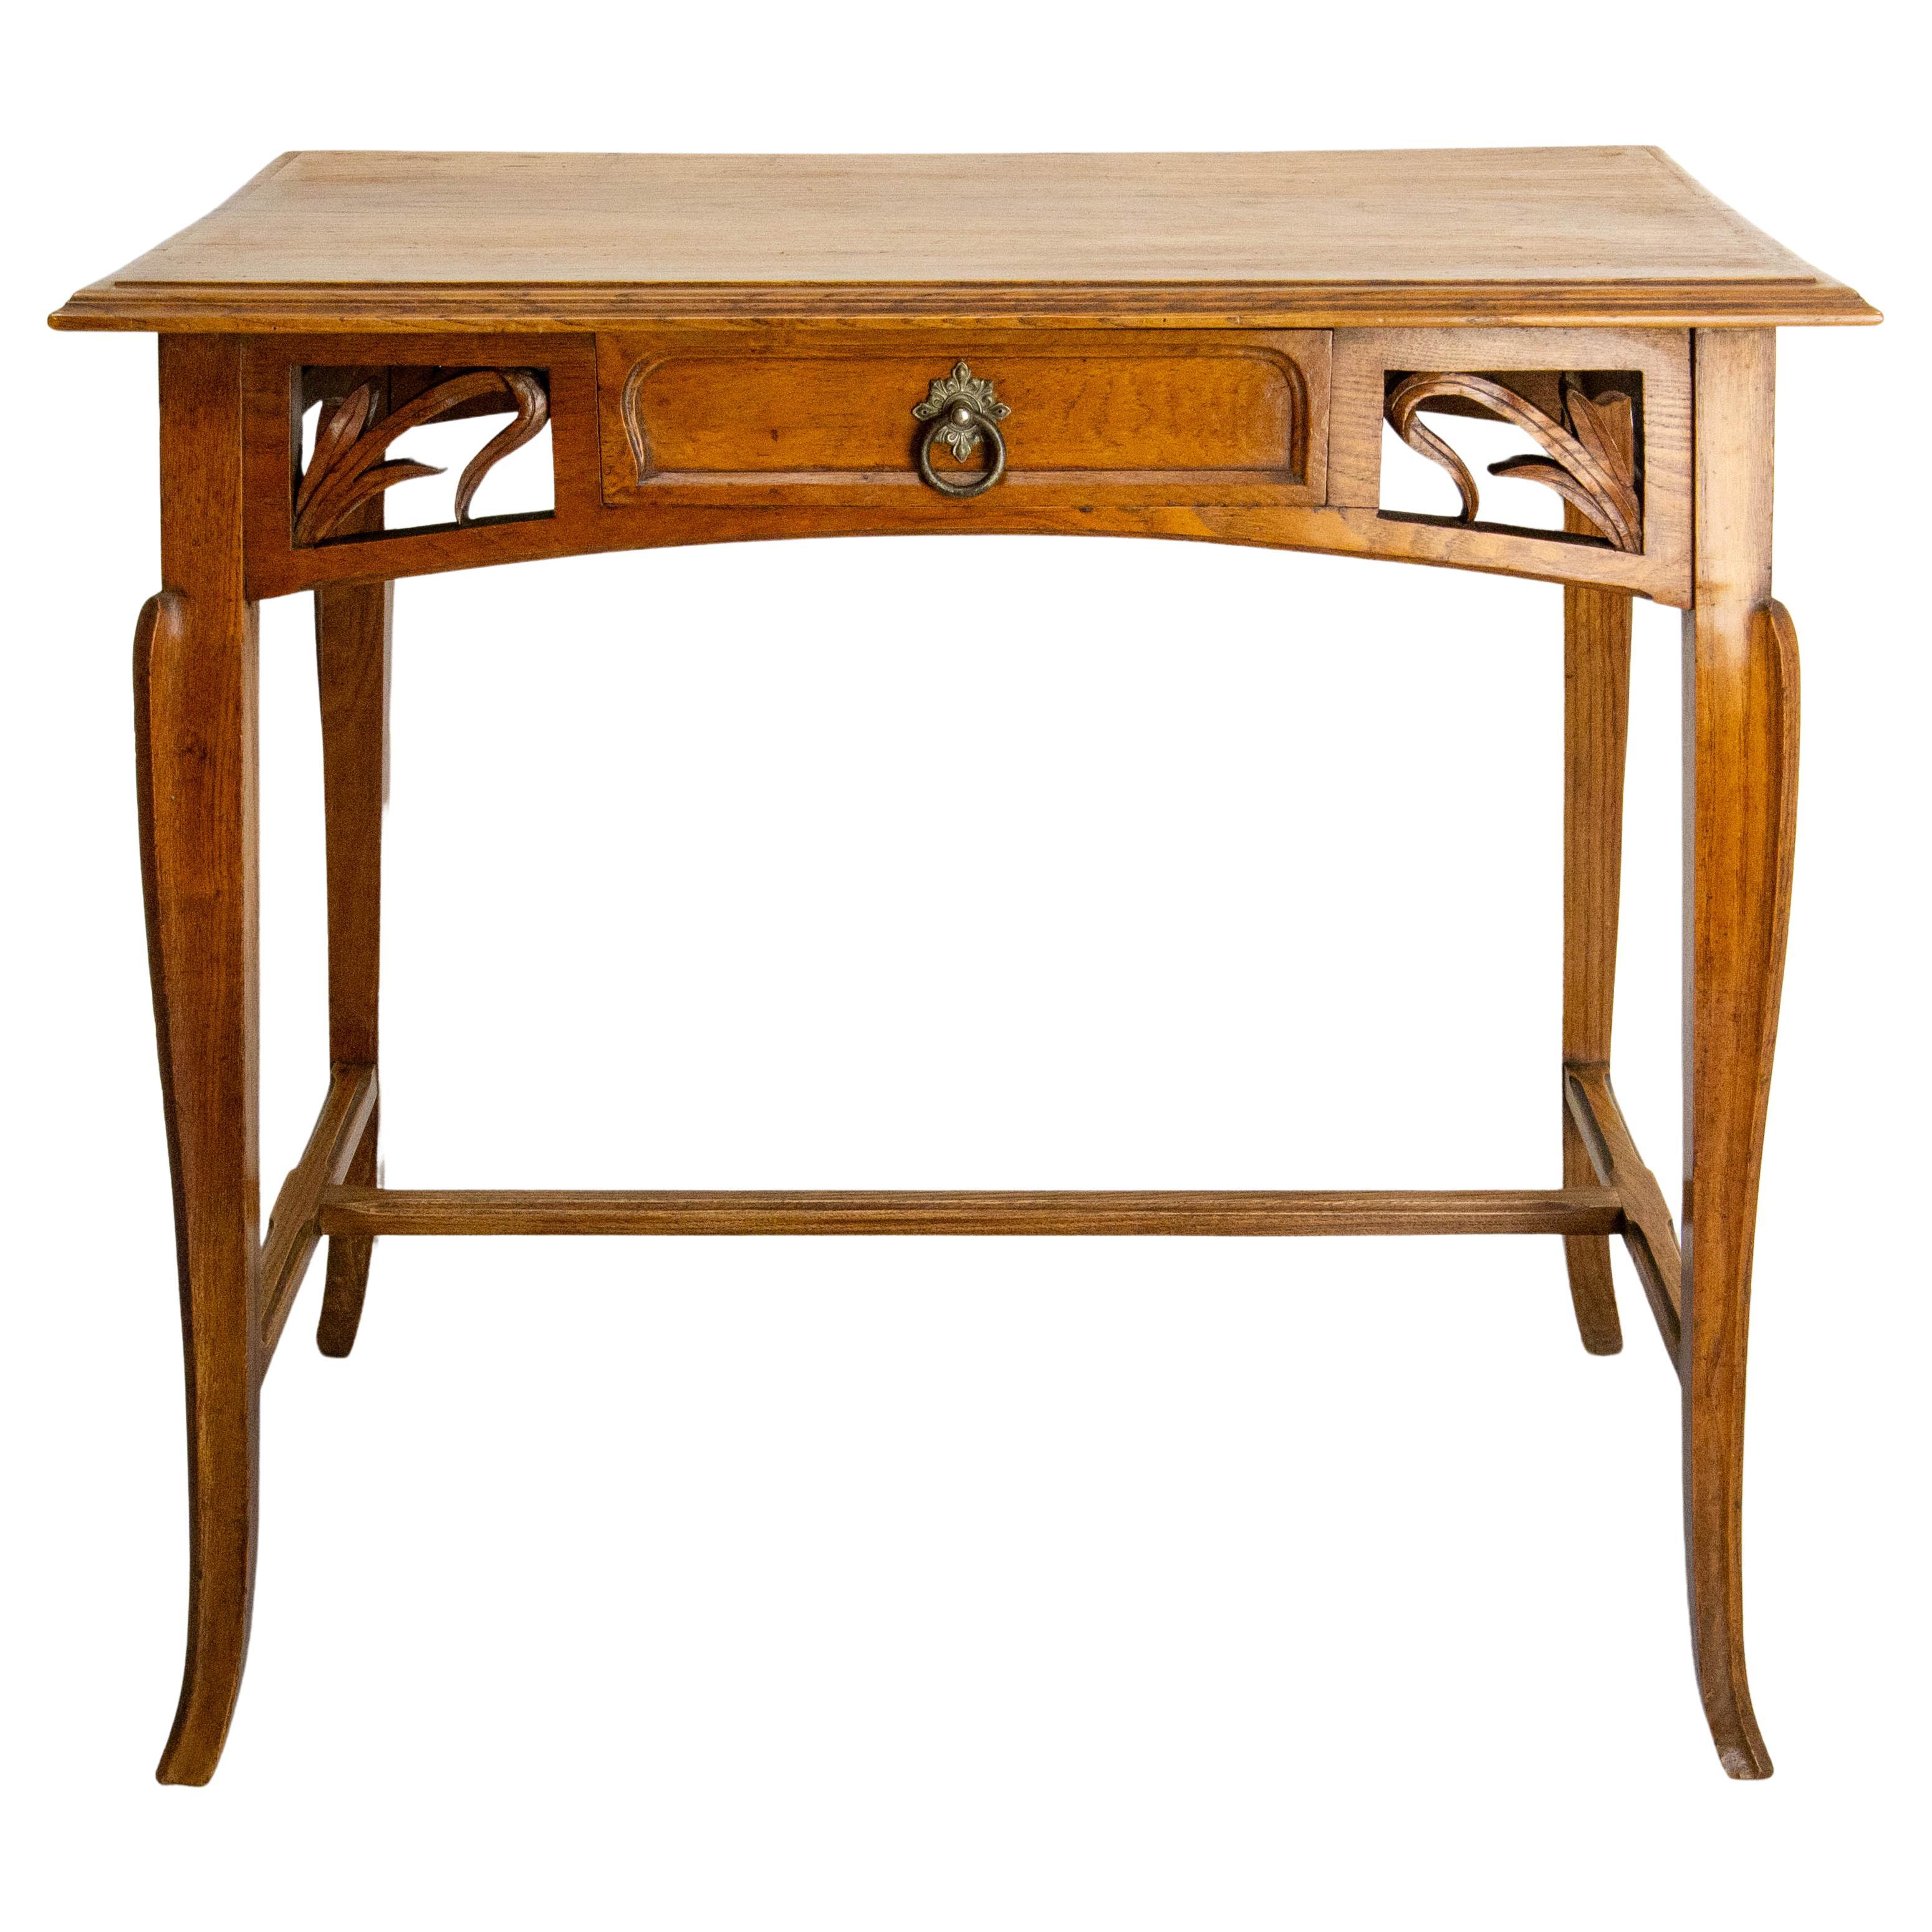 French Art Nouveau Oak Side Table Writing Table Vegetal Ornementation, c 1900 For Sale